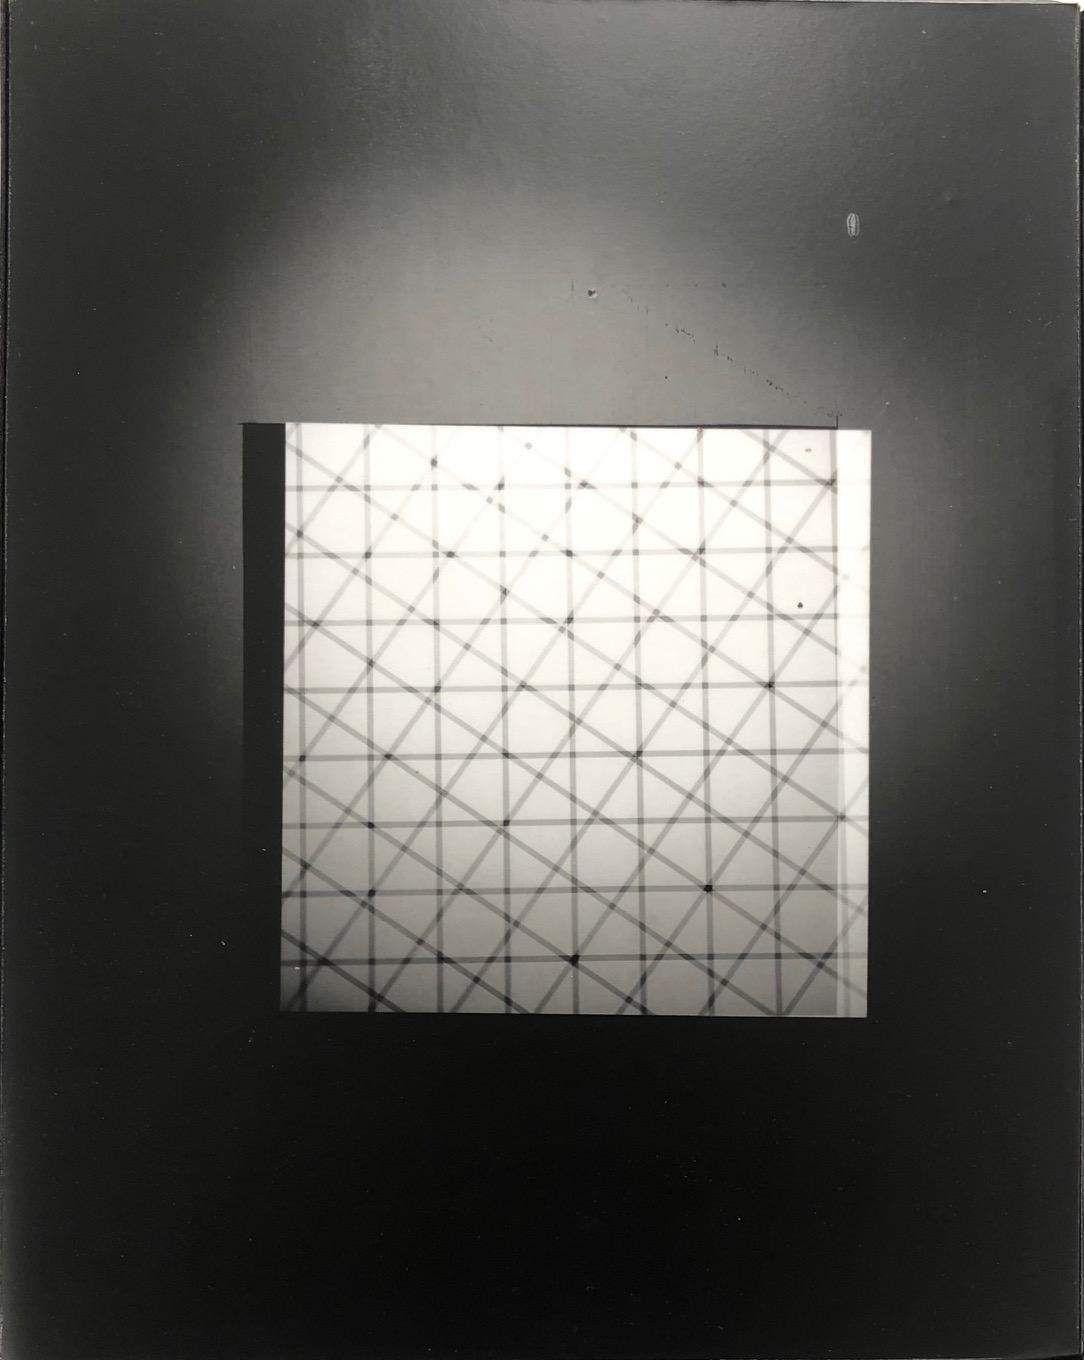 Juan Fernandez, Window (Negative), 2021, Laminated silver gelatin print mounted on masonite, 14” x 11” x 1”